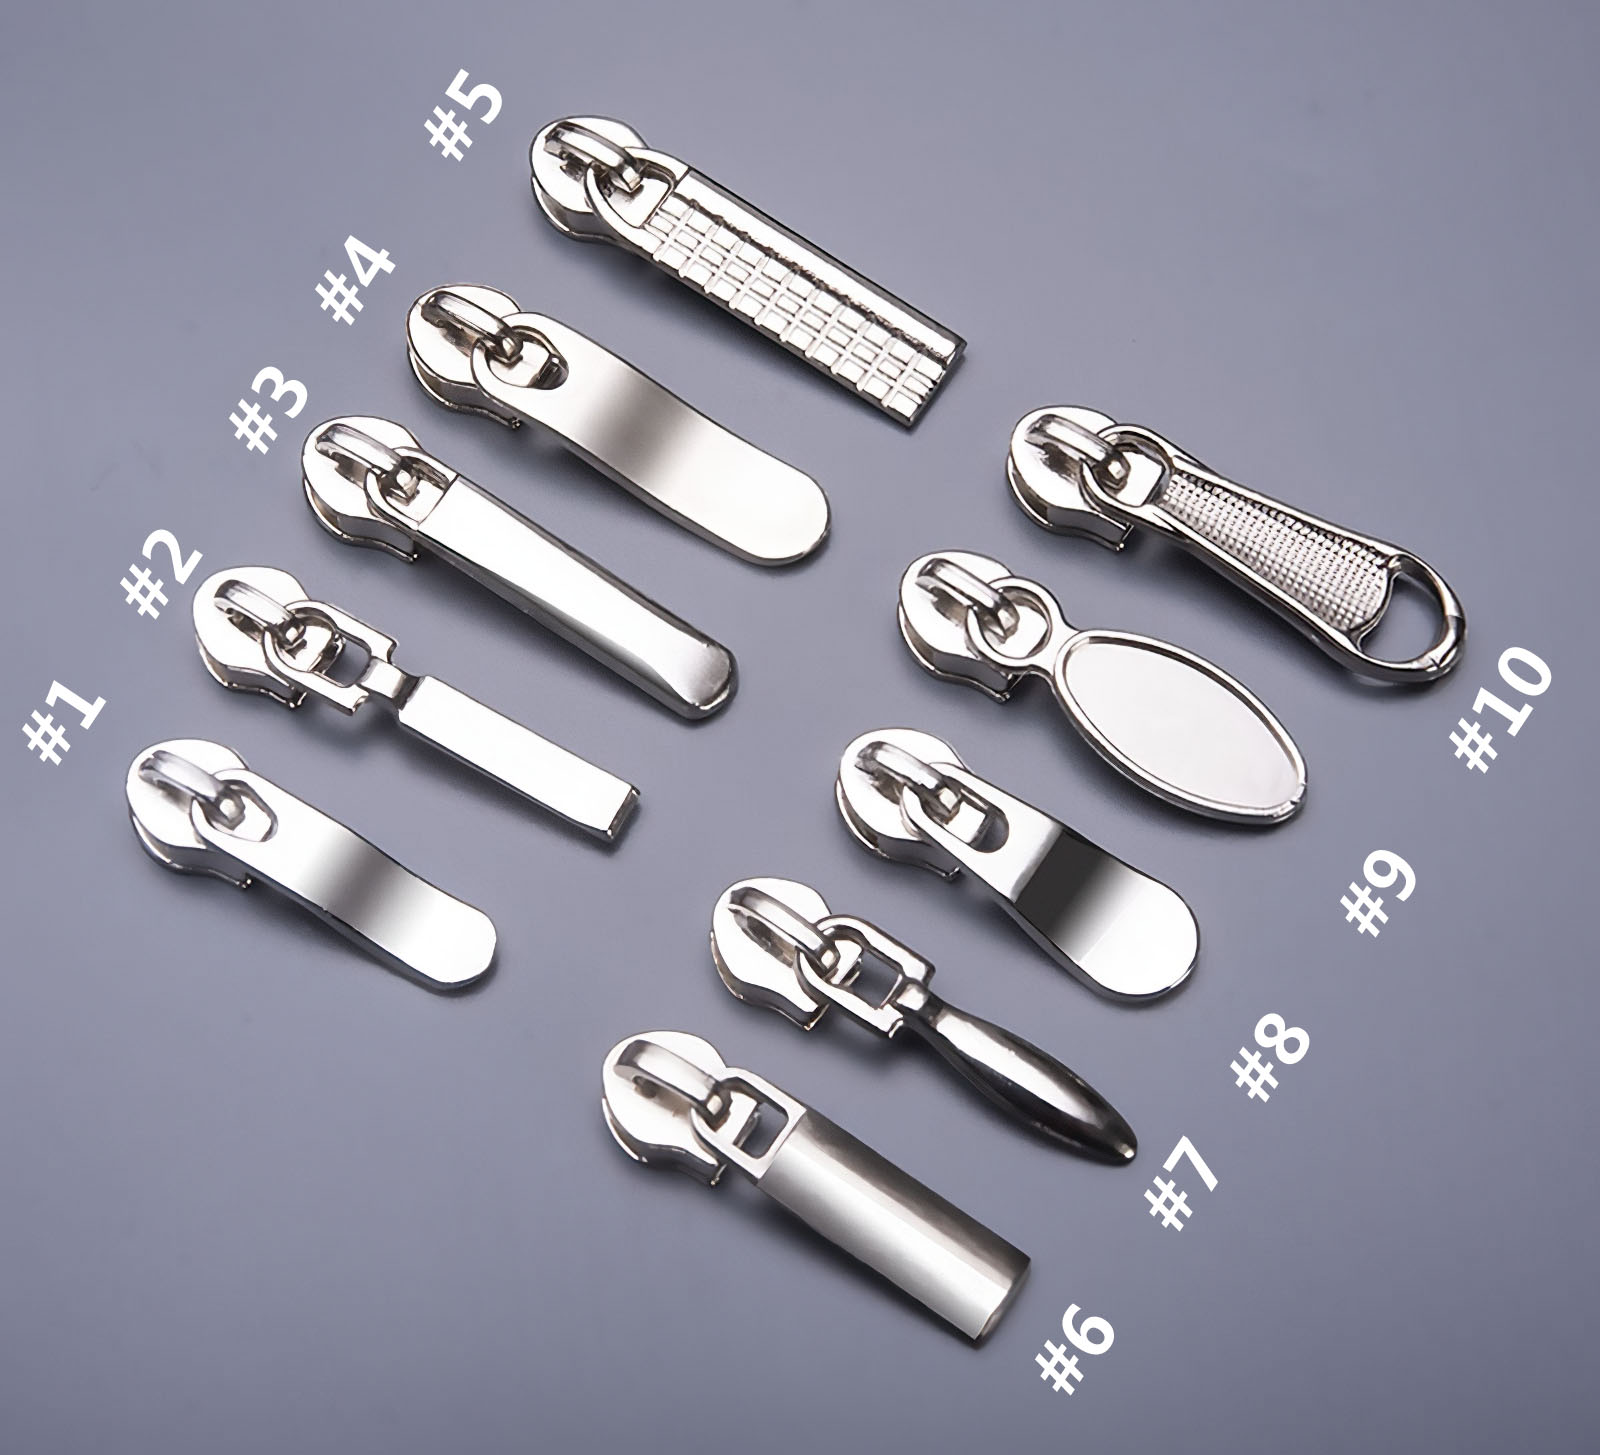 Metallic zipper puller options.